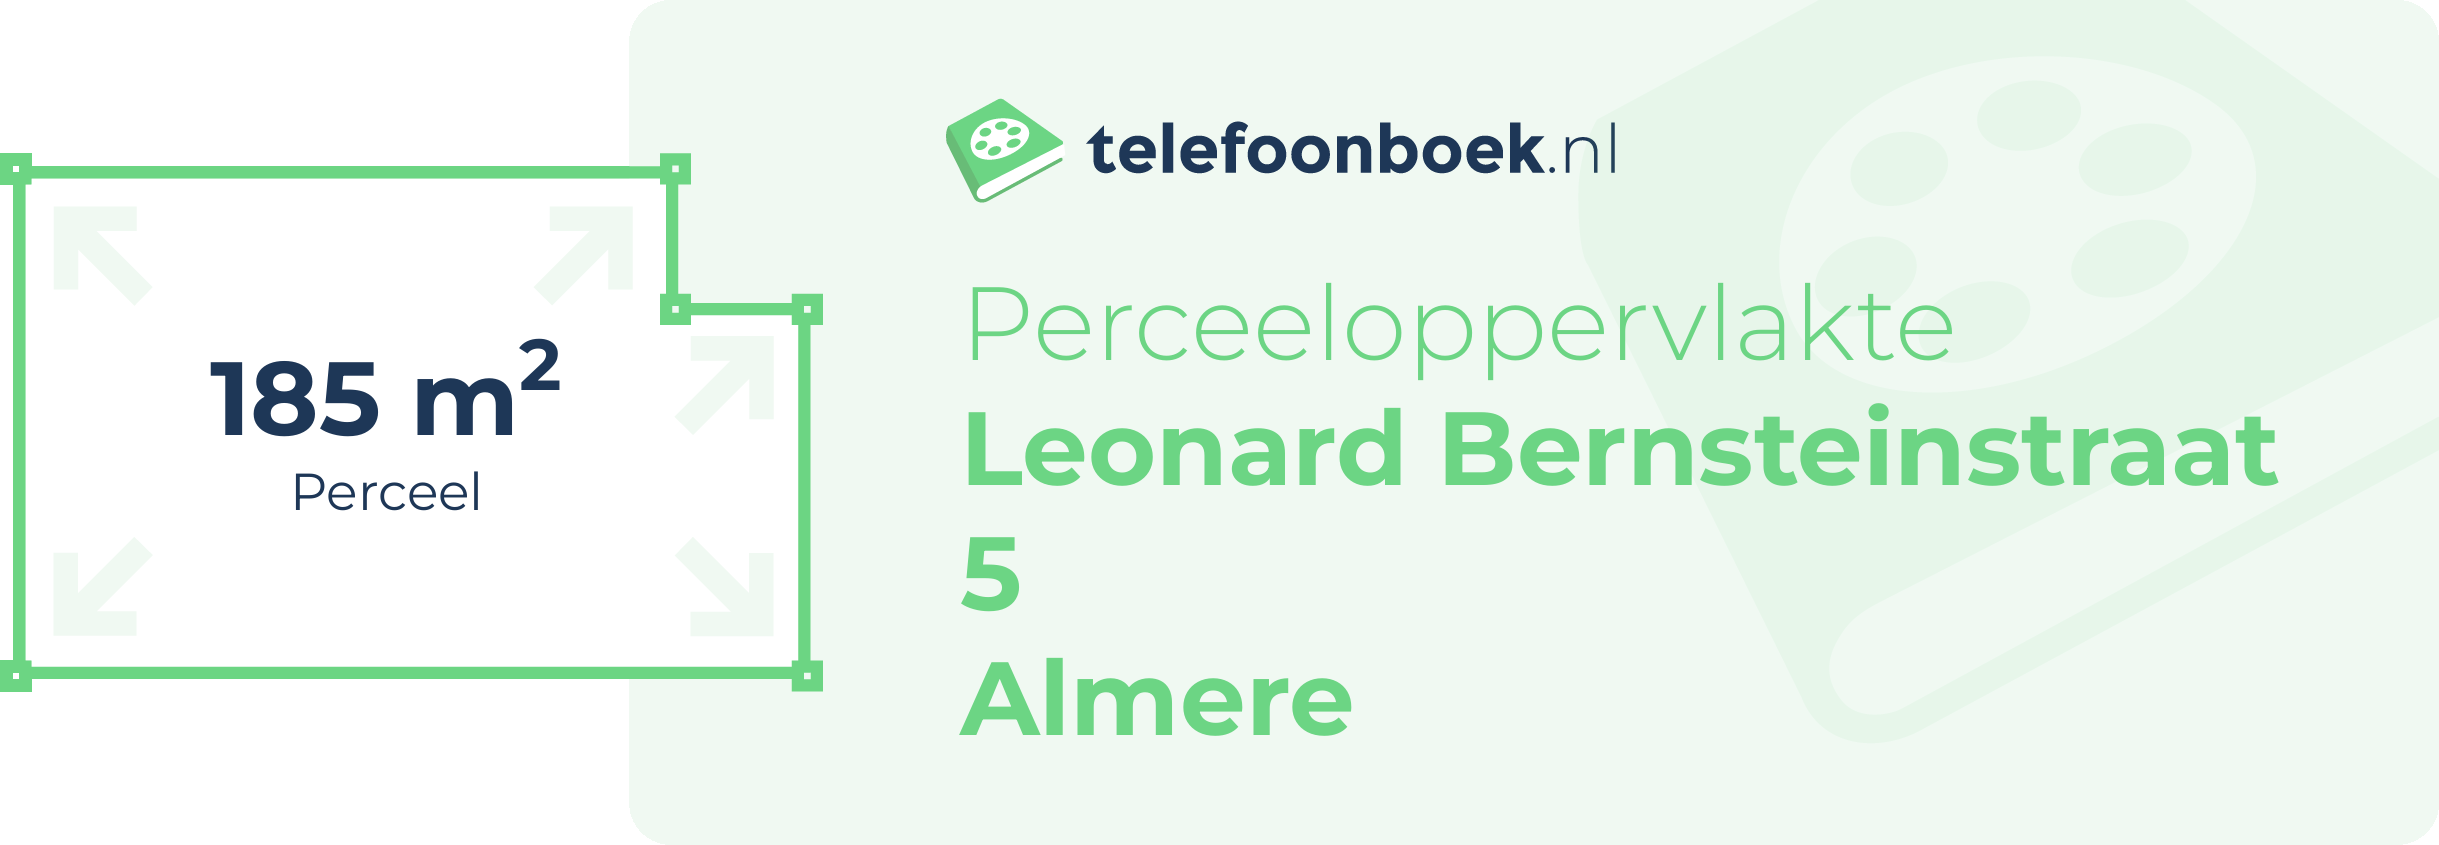 Perceeloppervlakte Leonard Bernsteinstraat 5 Almere